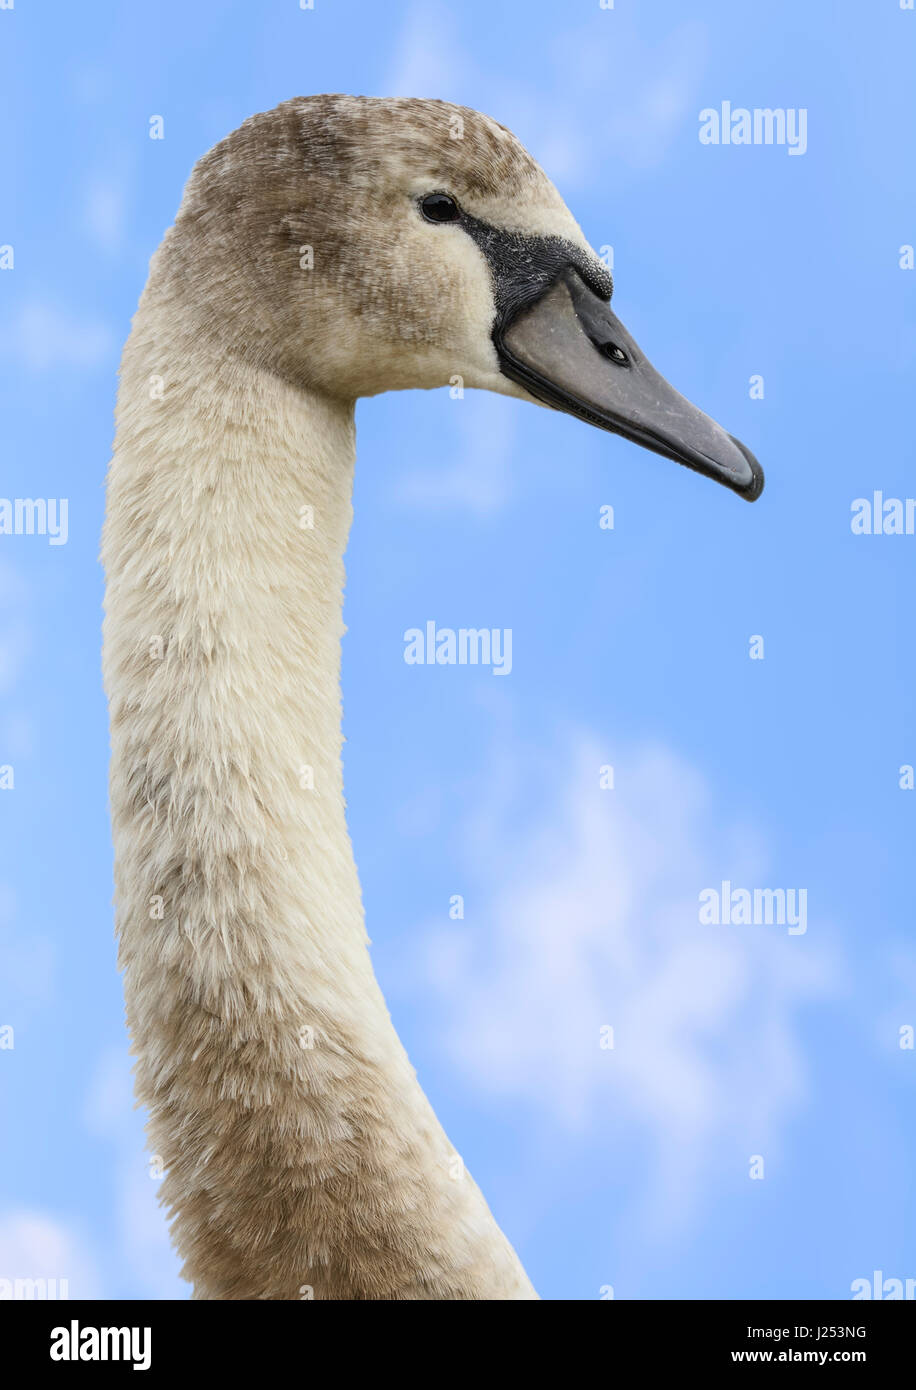 Long neck of a White Mute Swan Cygnet (Cygnus olor) against blue sky. Stock Photo